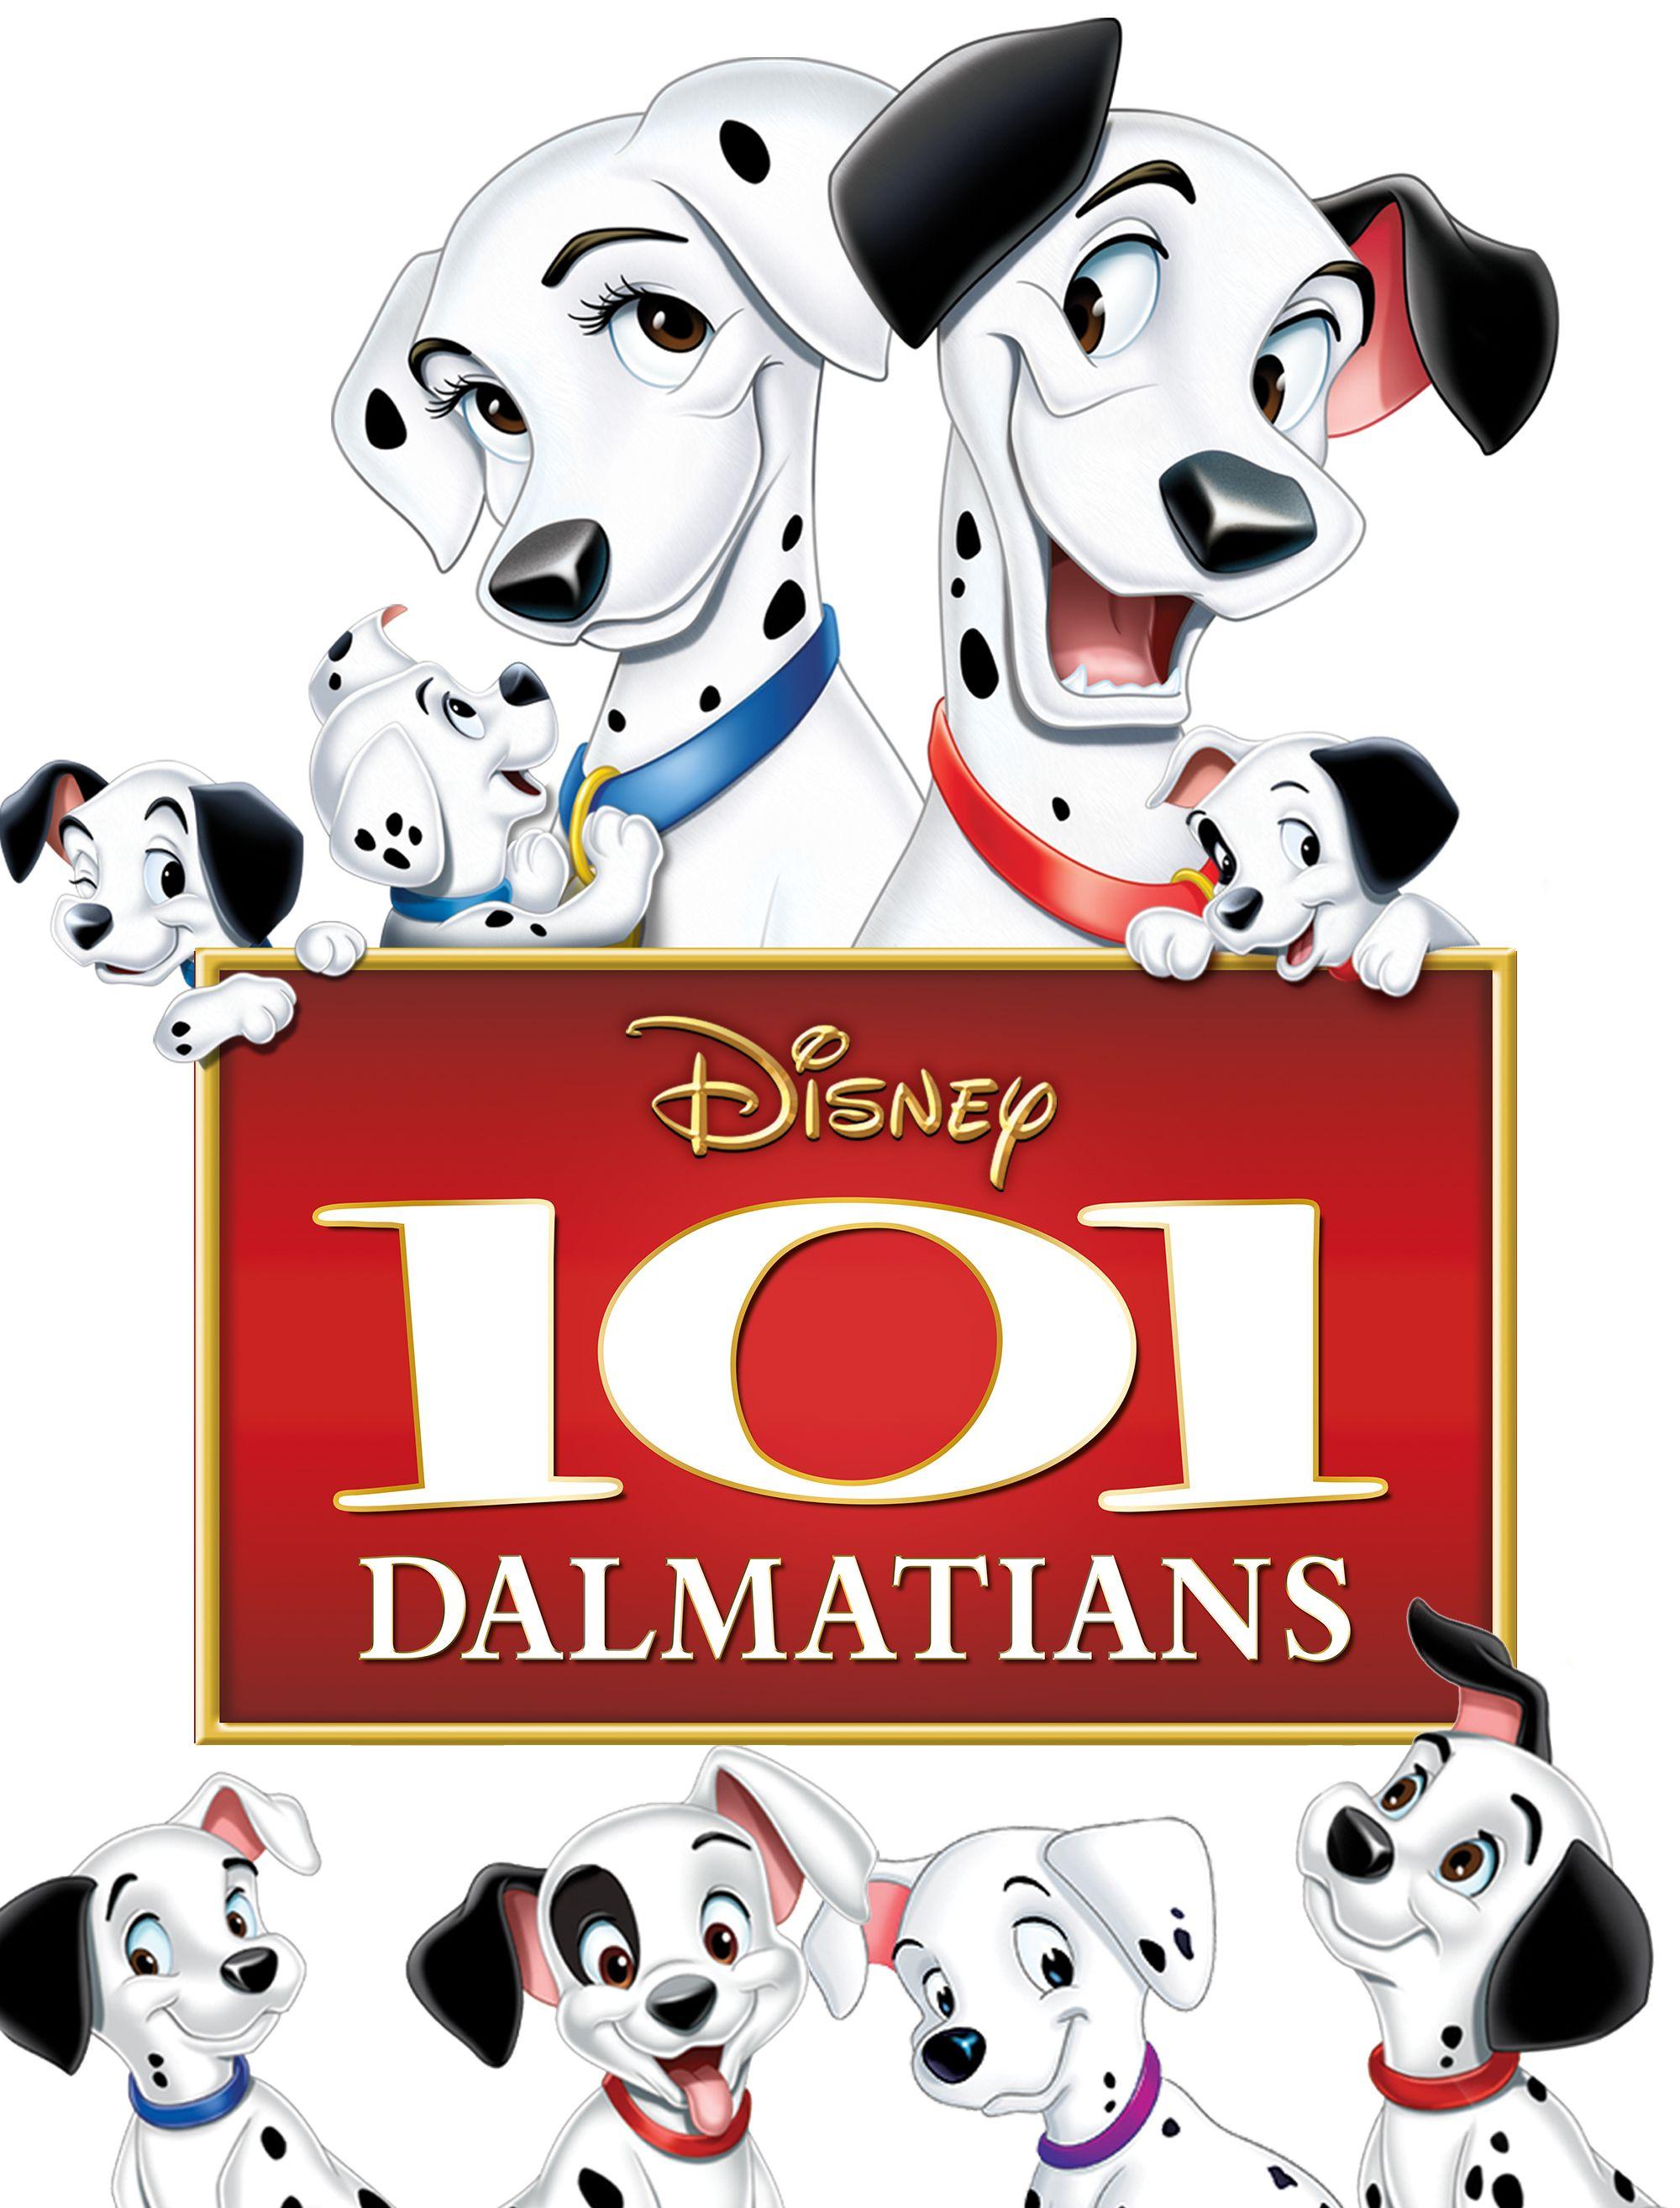 1801x967px 101 Dalmatians (961.14 KB).07.2015